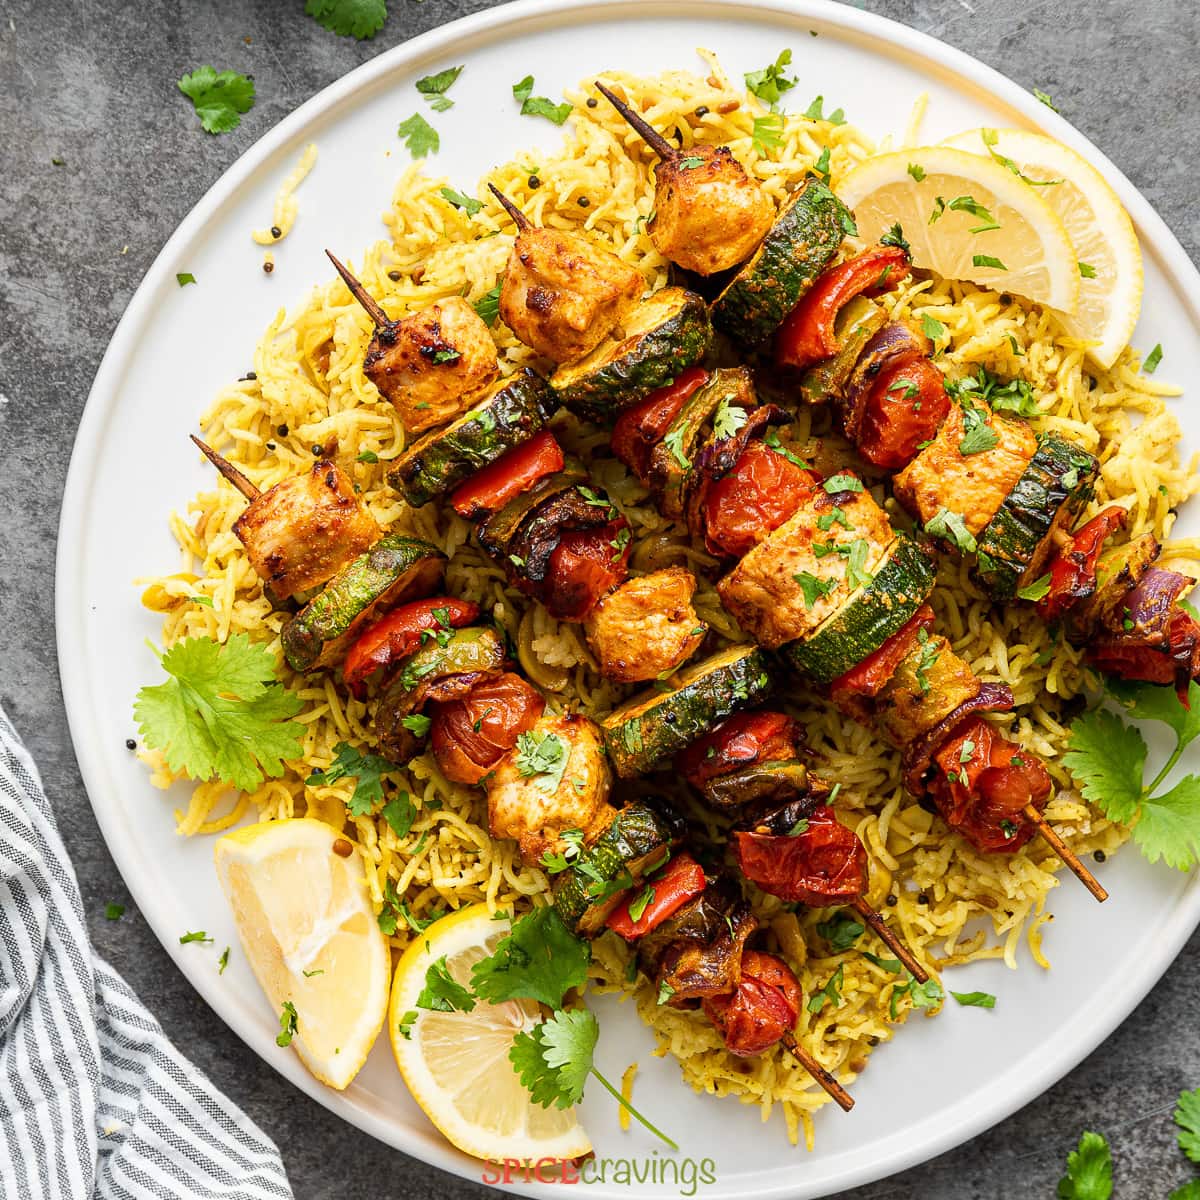 Chicken Shish Kebab with Lemon Rice - Spice Cravings